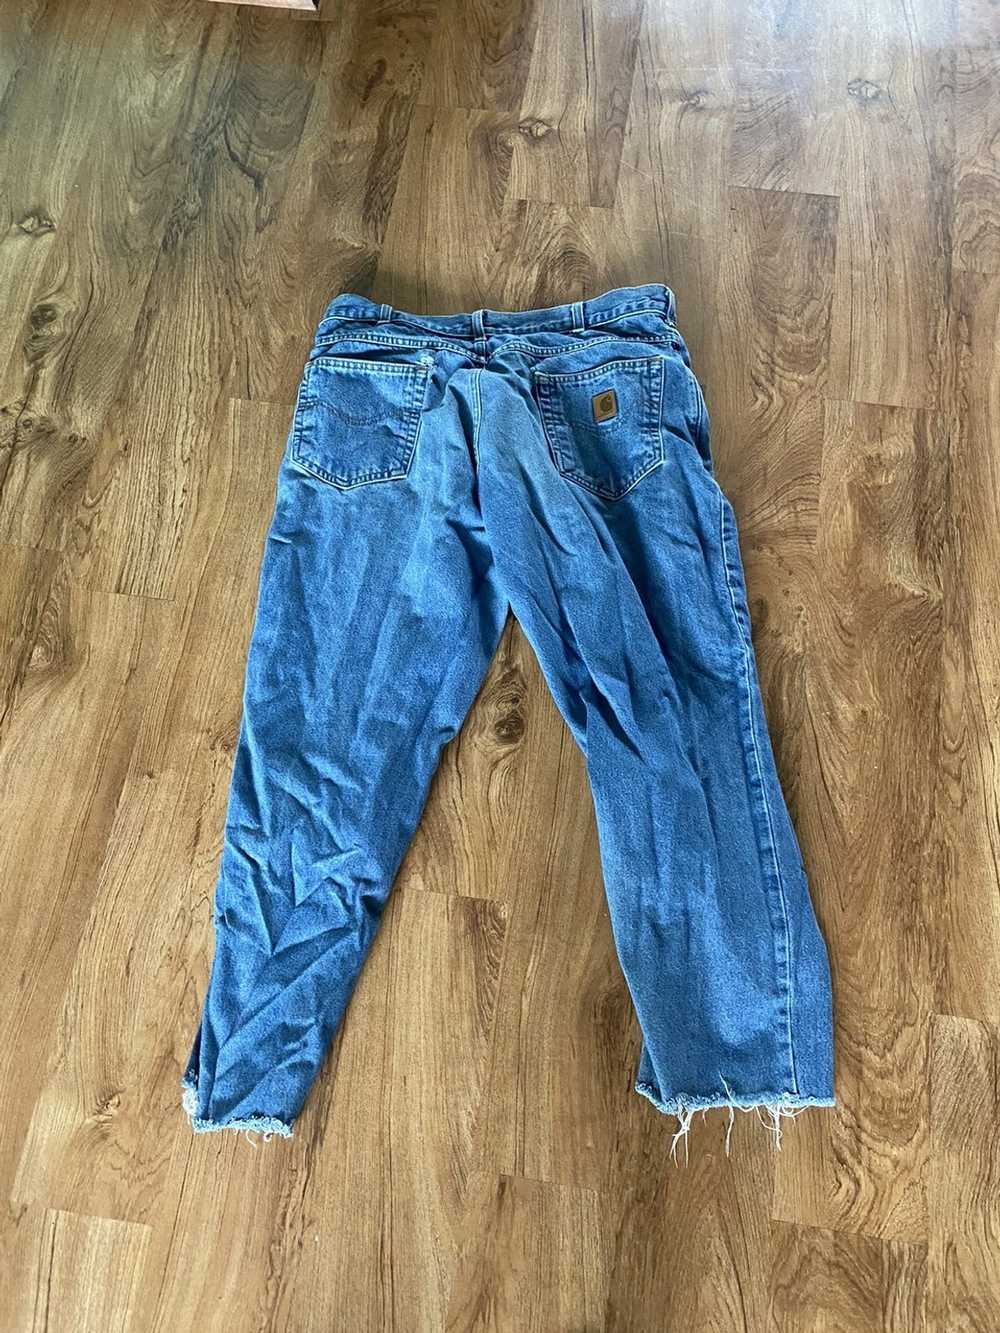 Carhartt Distressed Carhartt Jeans - image 5